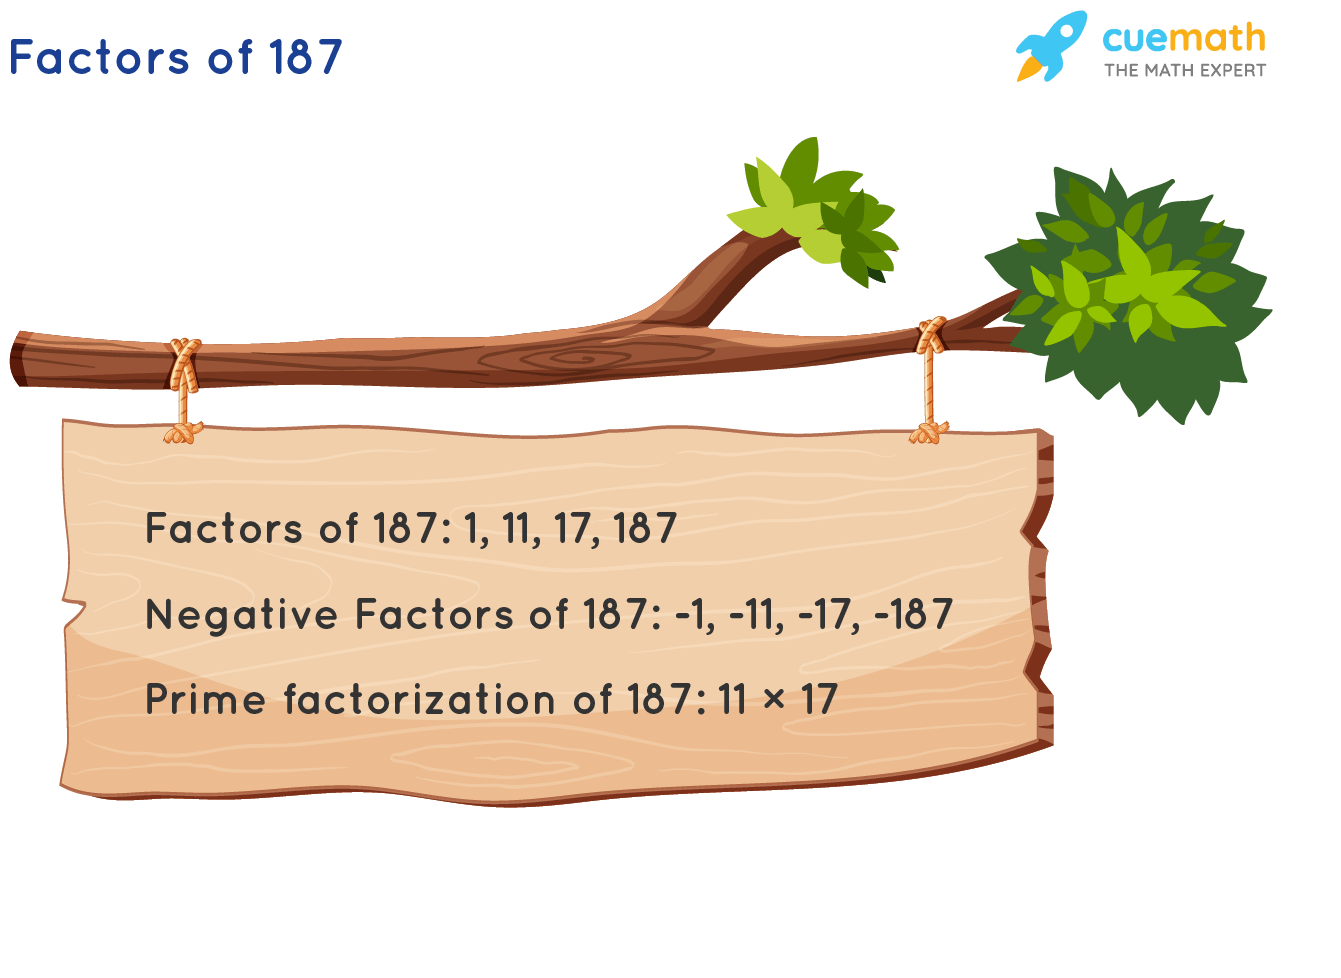 Factors of 187 - Find Prime Factorization/Factors of 187